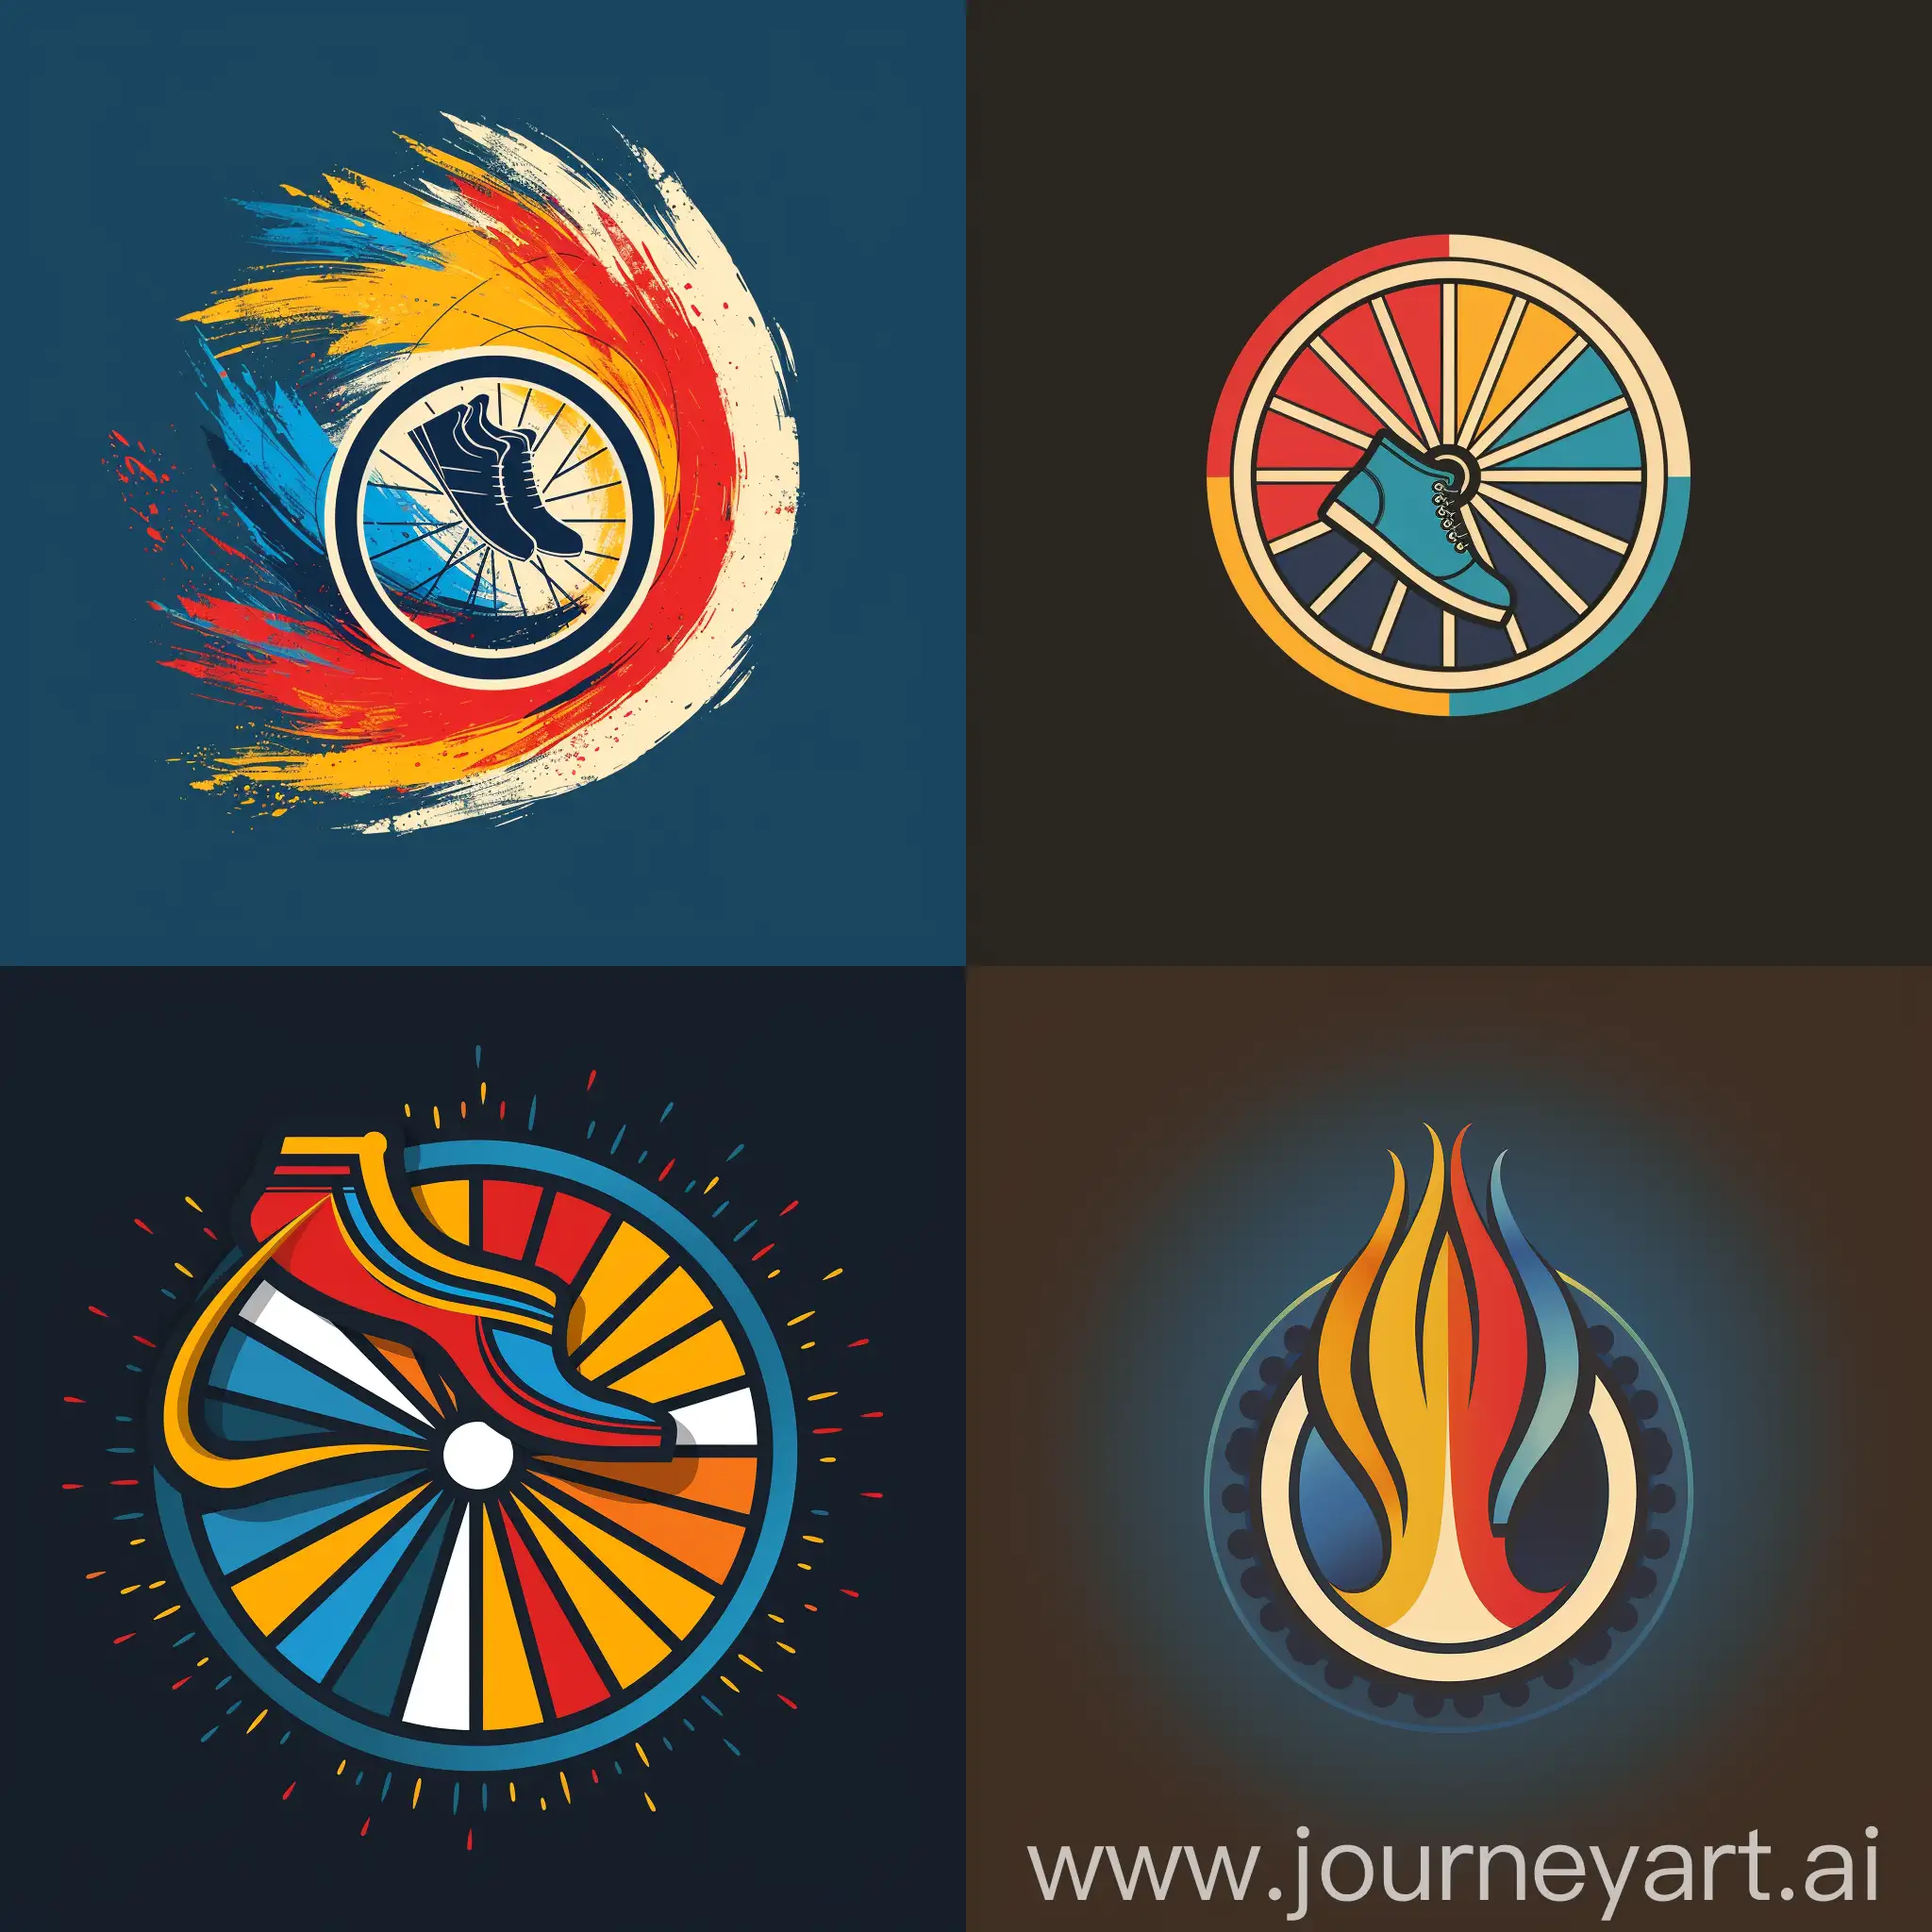 Bike-Shoe-Fusion-Logo-Dynamic-Wheel-and-Shoe-Symbol-in-Vibrant-Colors